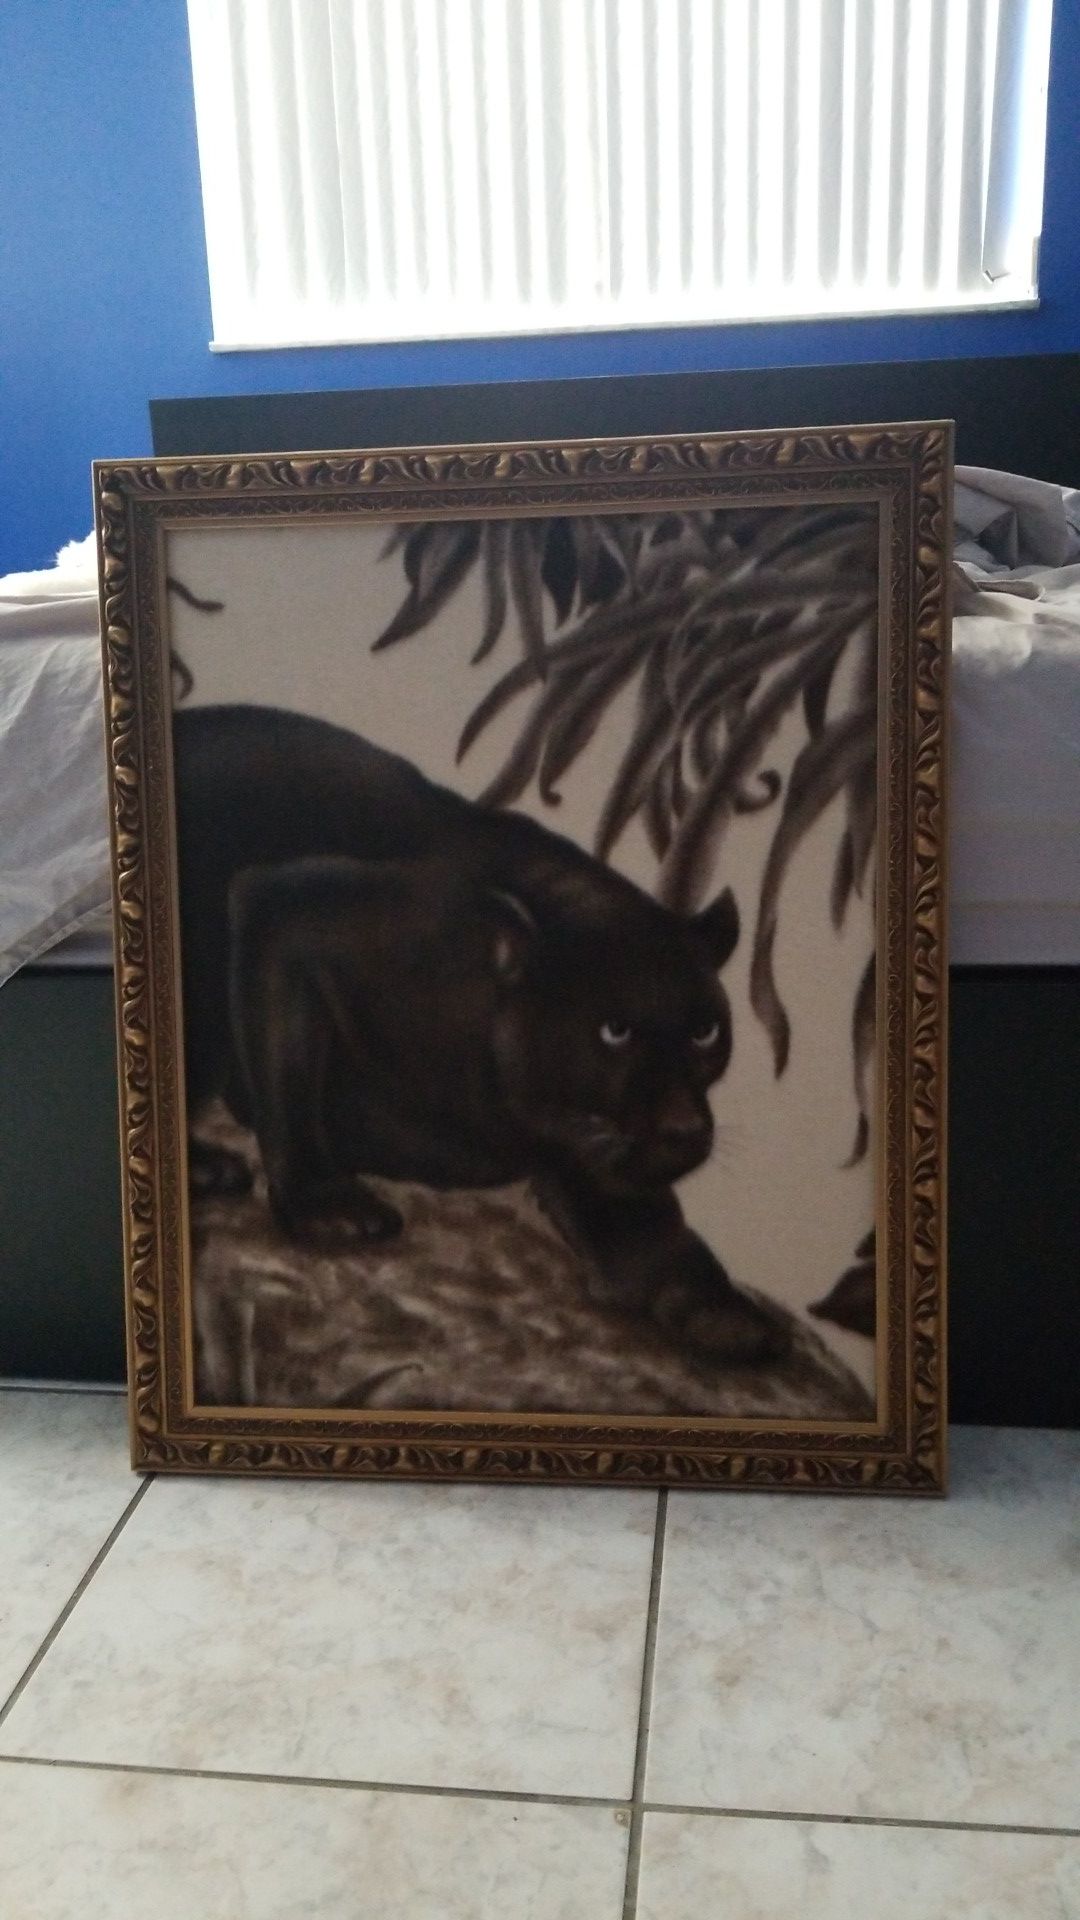 Black Panther Painting